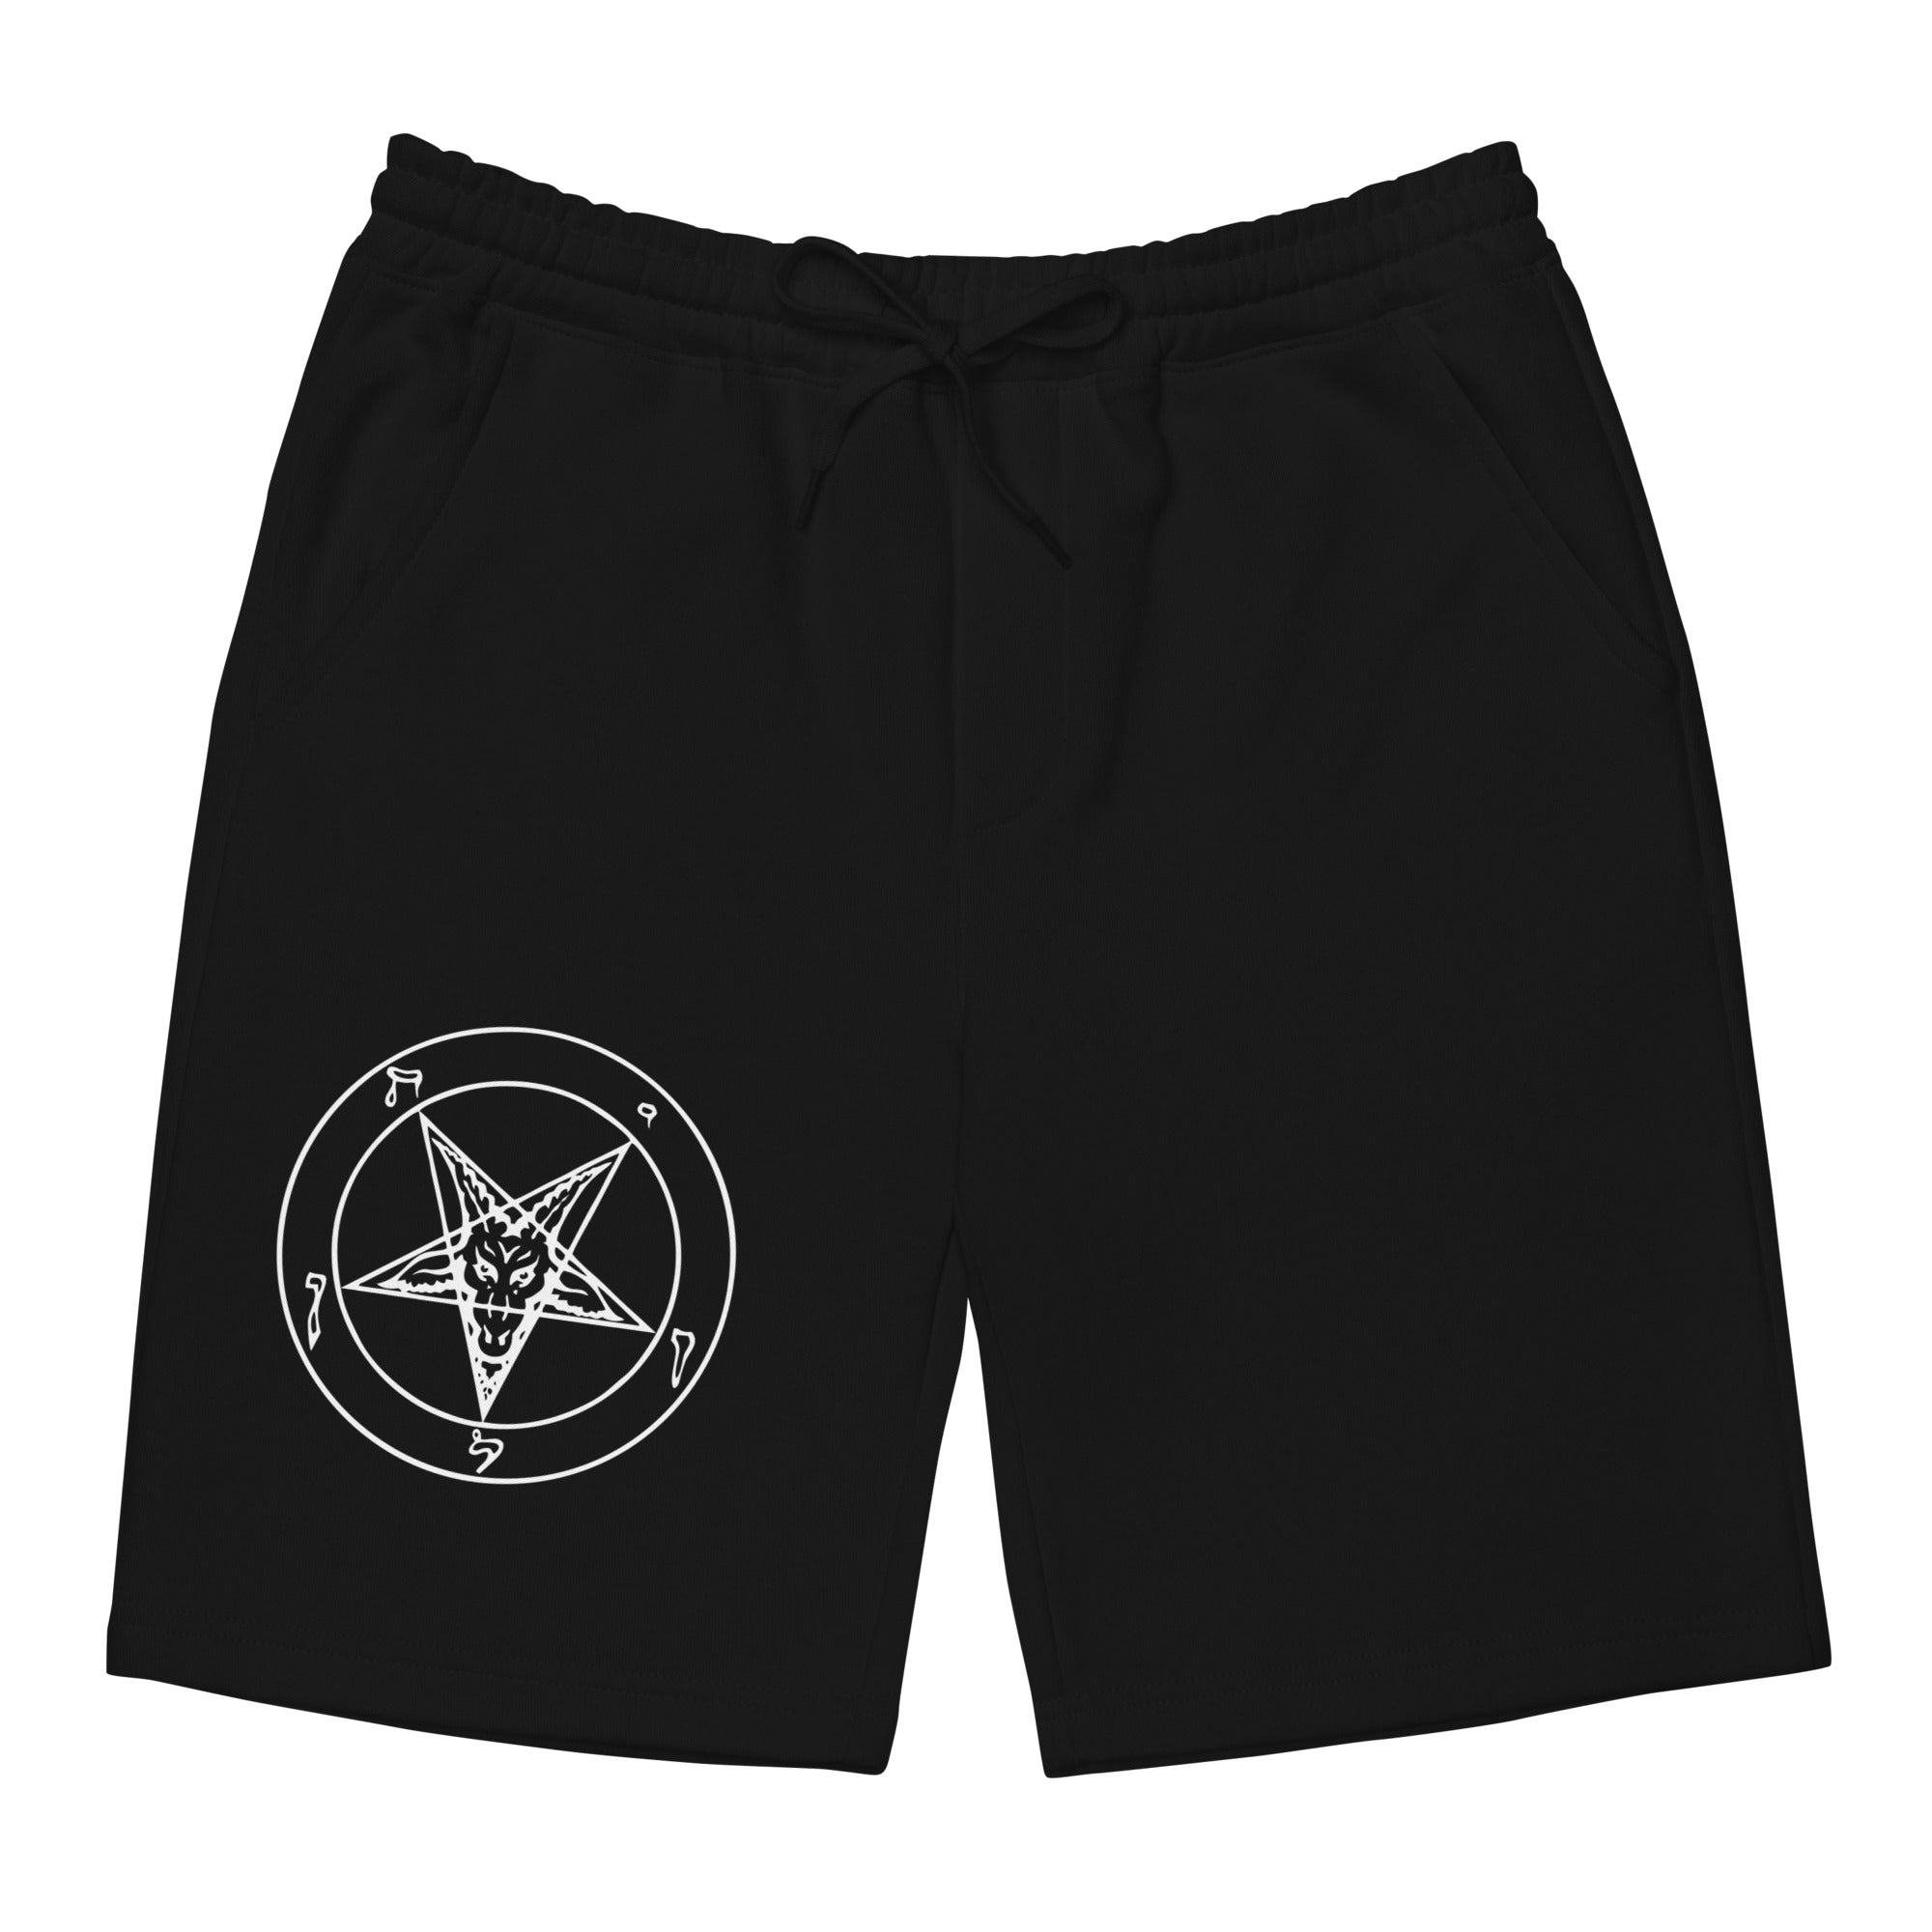 White Baphomet Sigil - Satanic Symbol on Black Men's fleece shorts - Edge of Life Designs